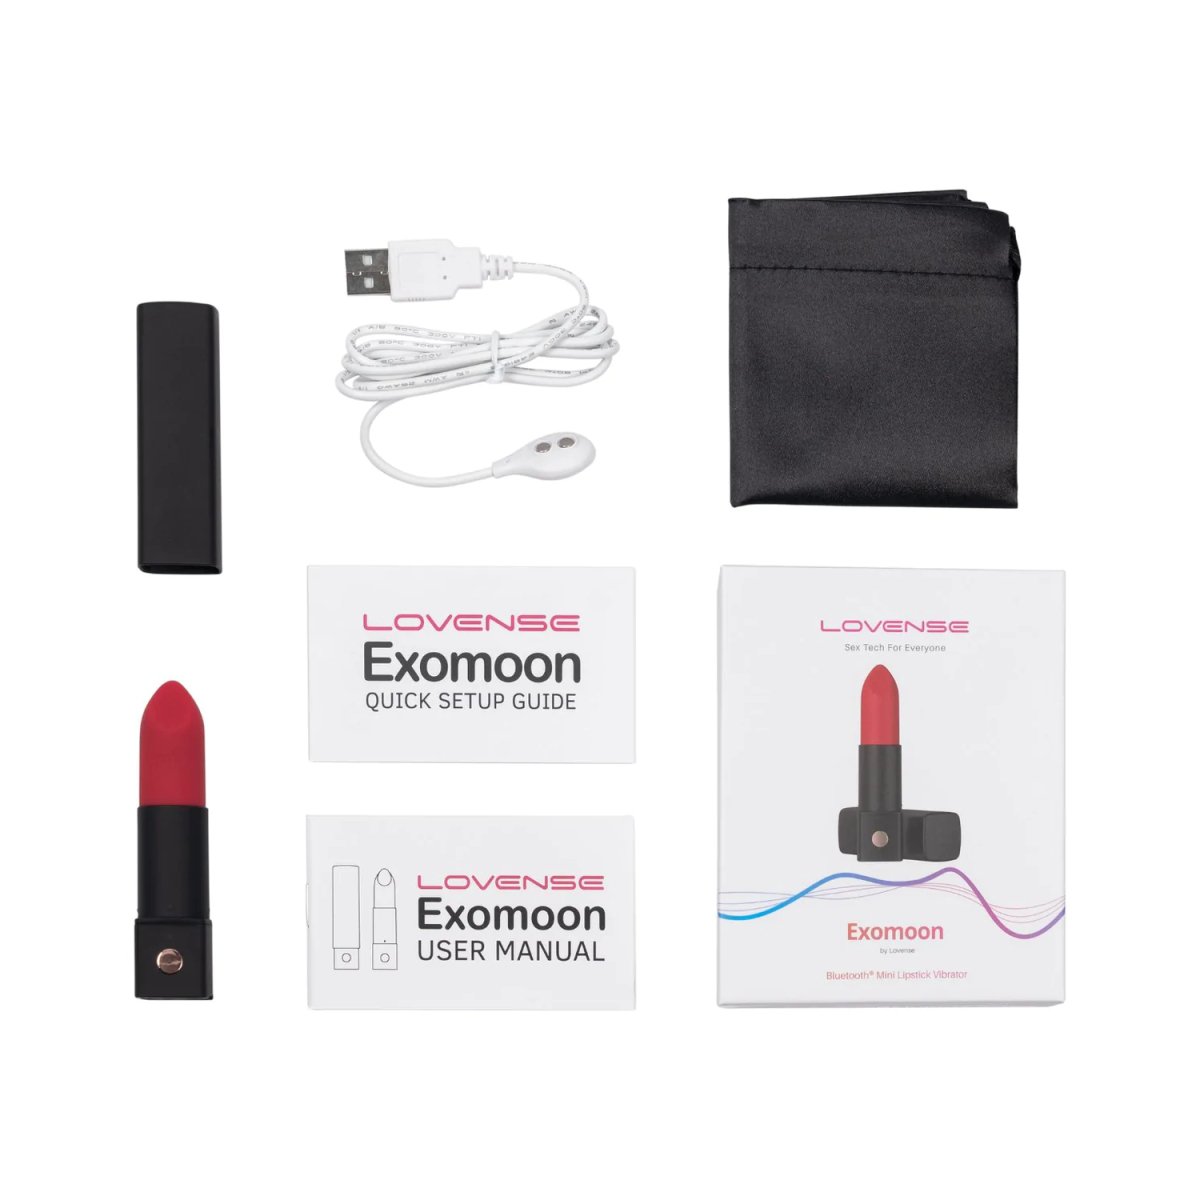 Lovense Exomoon Bluetooth Lipstick Bullet Vibrator - FRISKY BUSINESS SG